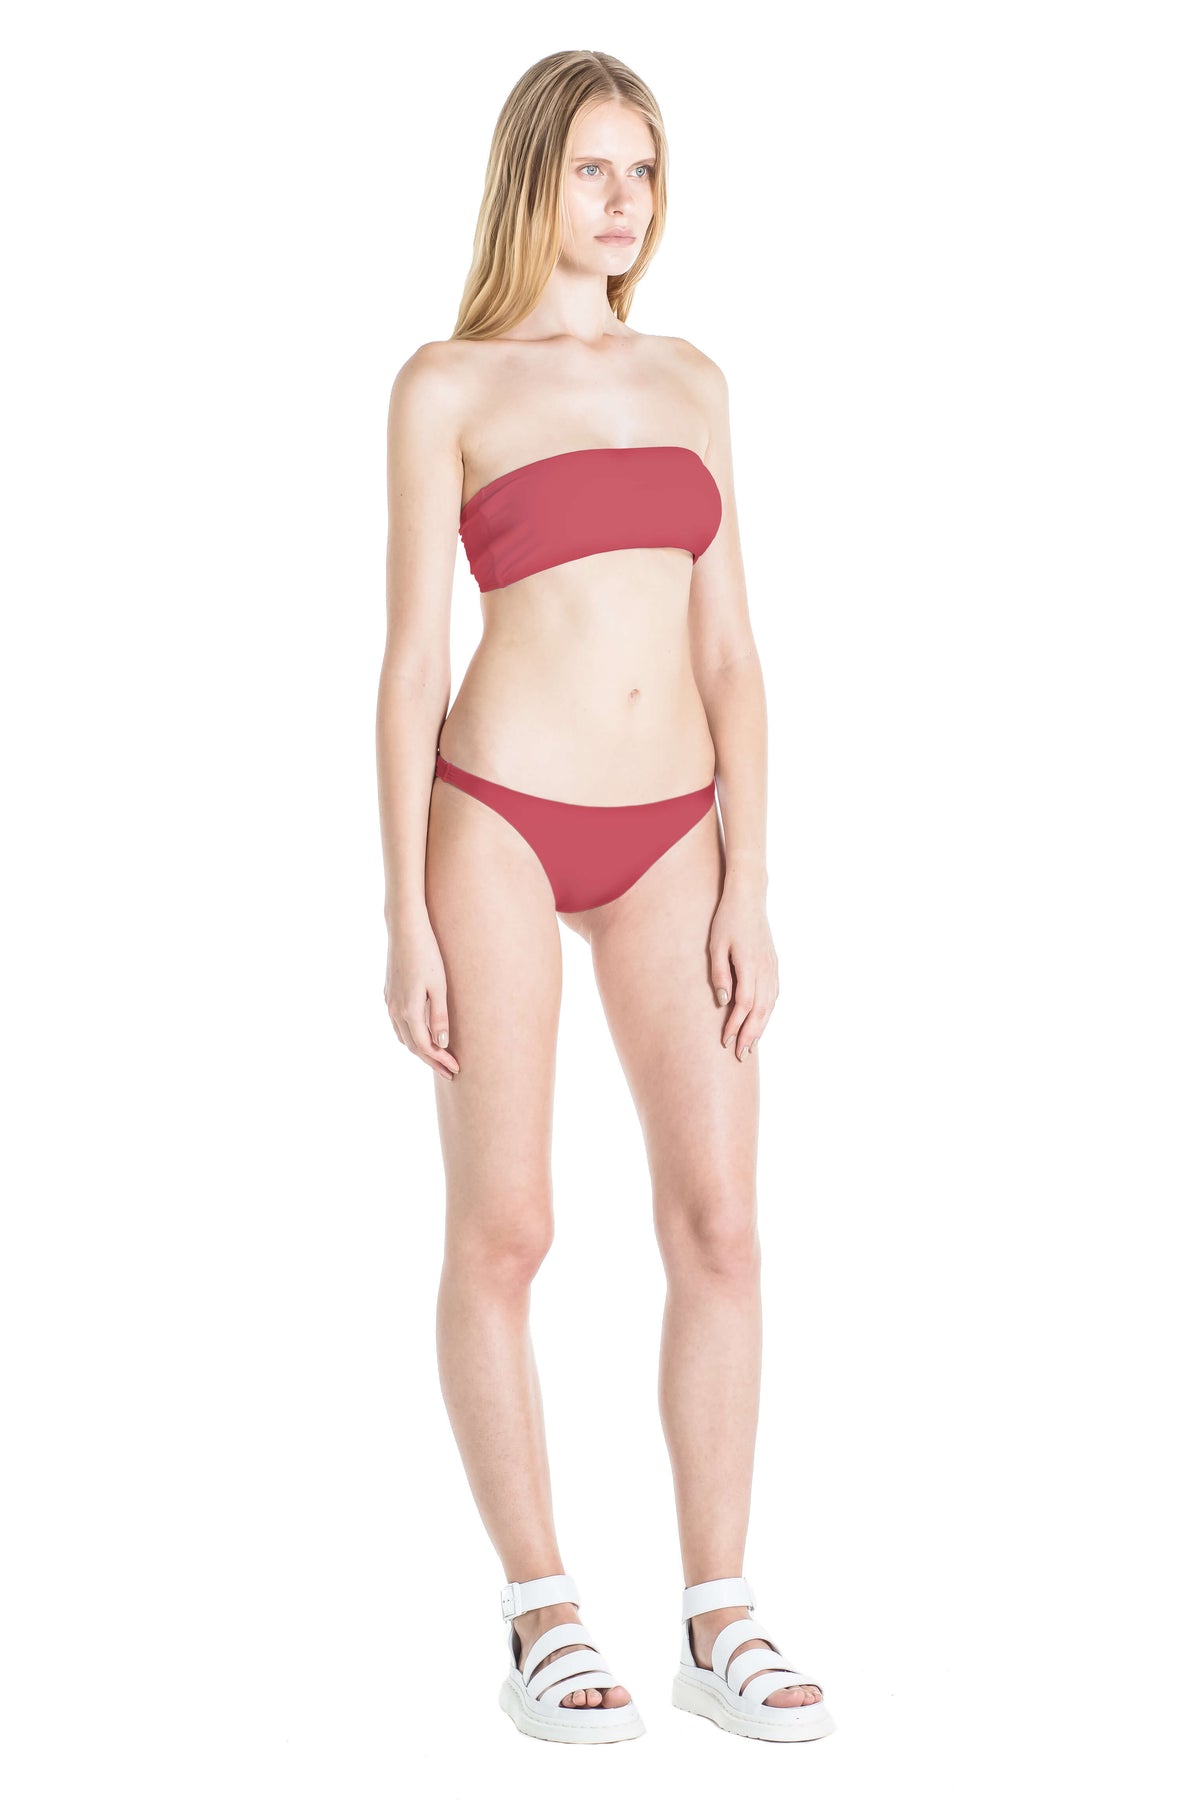 Side of Diane swimsuit bottom in Terracotta